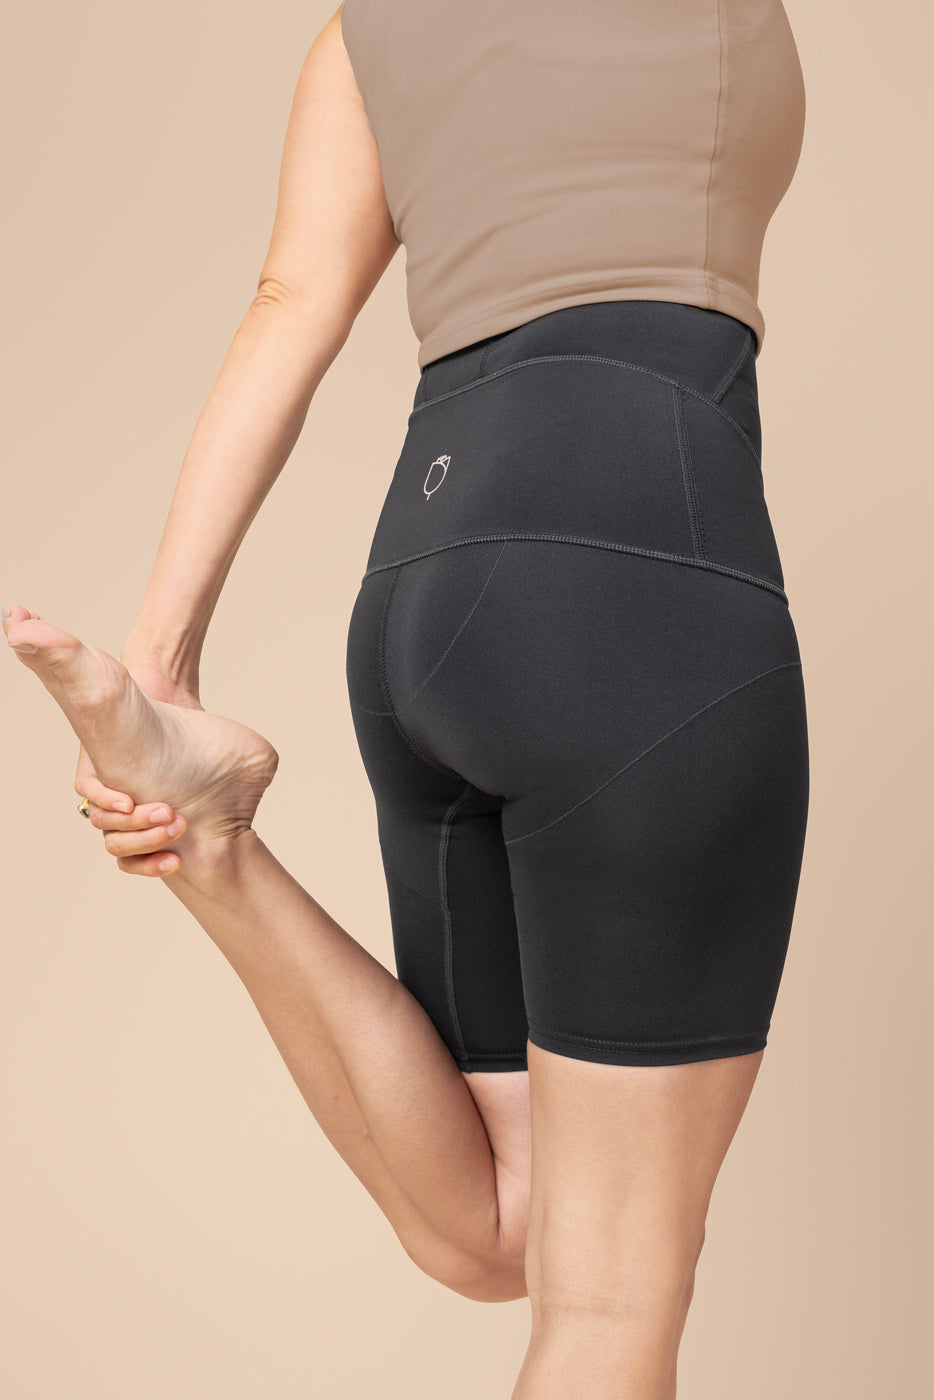 Postpartum Recovery Shorts - Knee I Everform